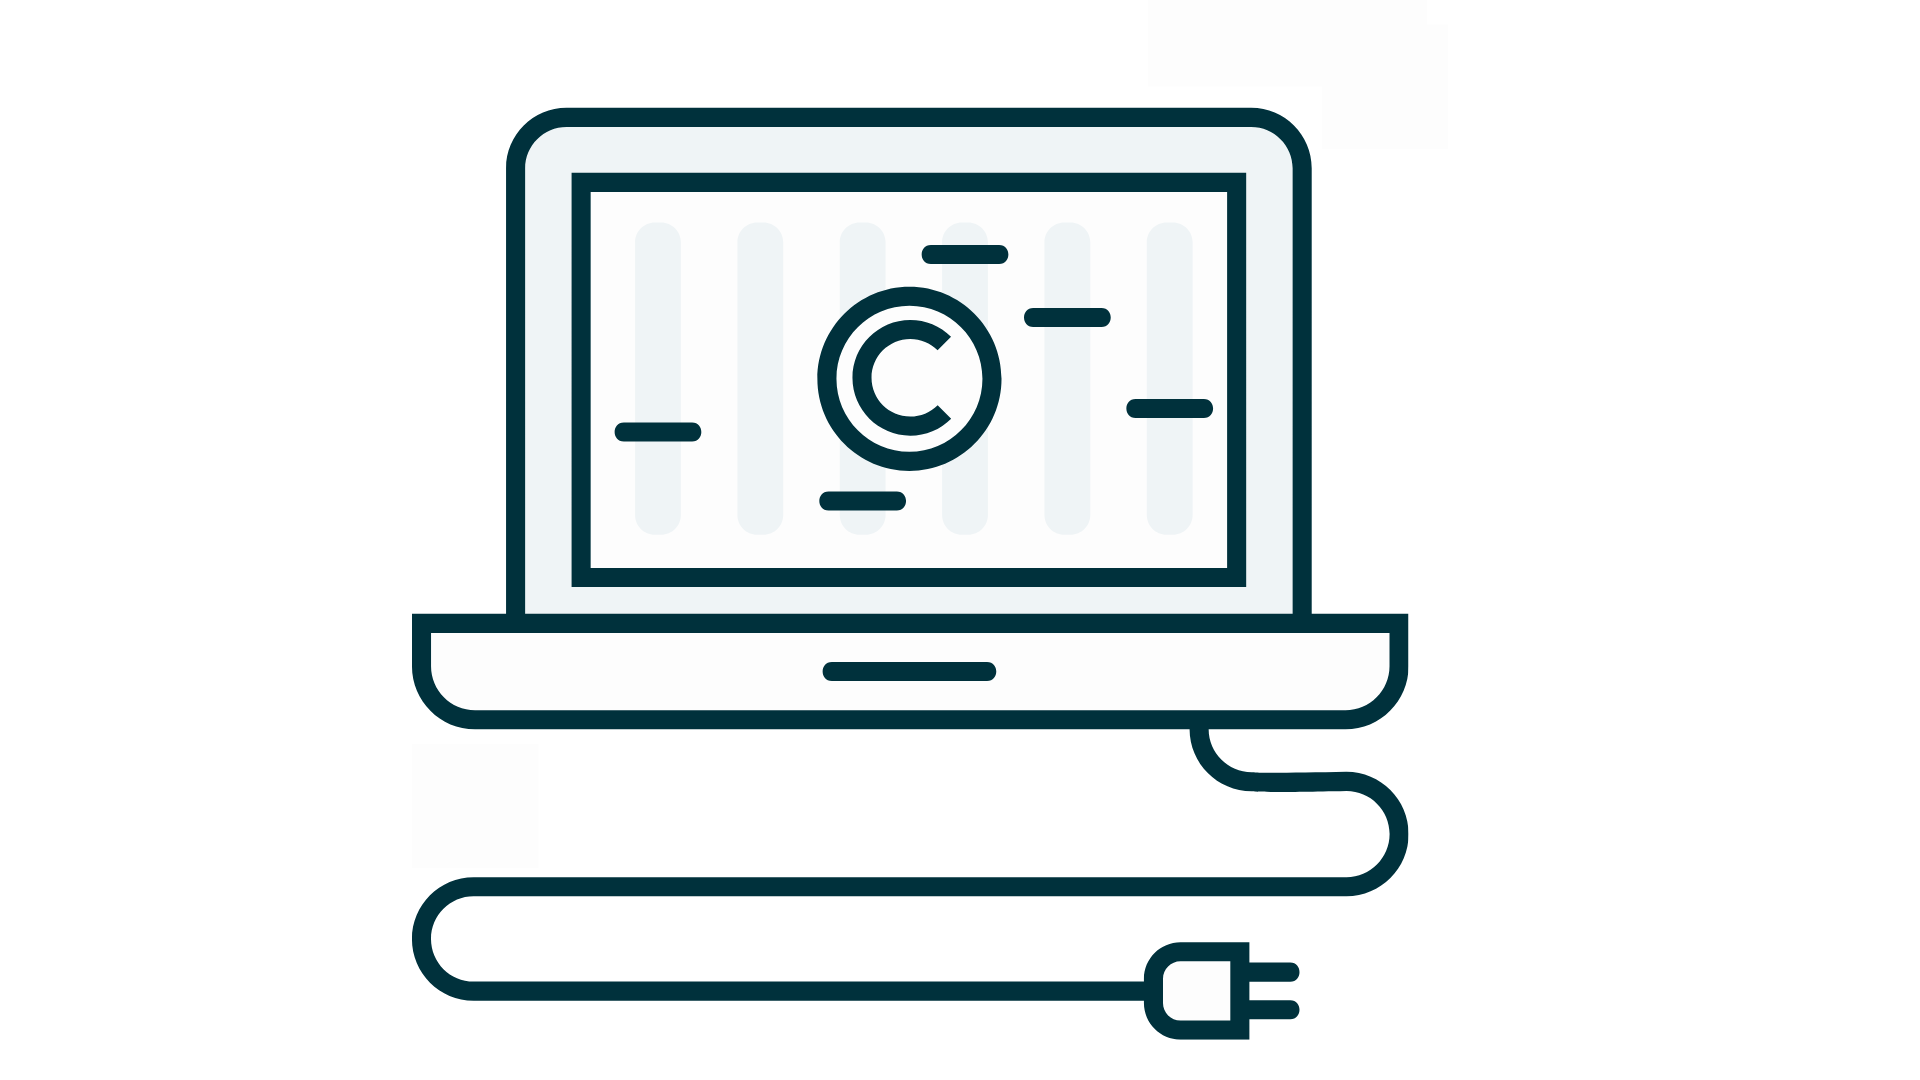 copyright symbol on a computer